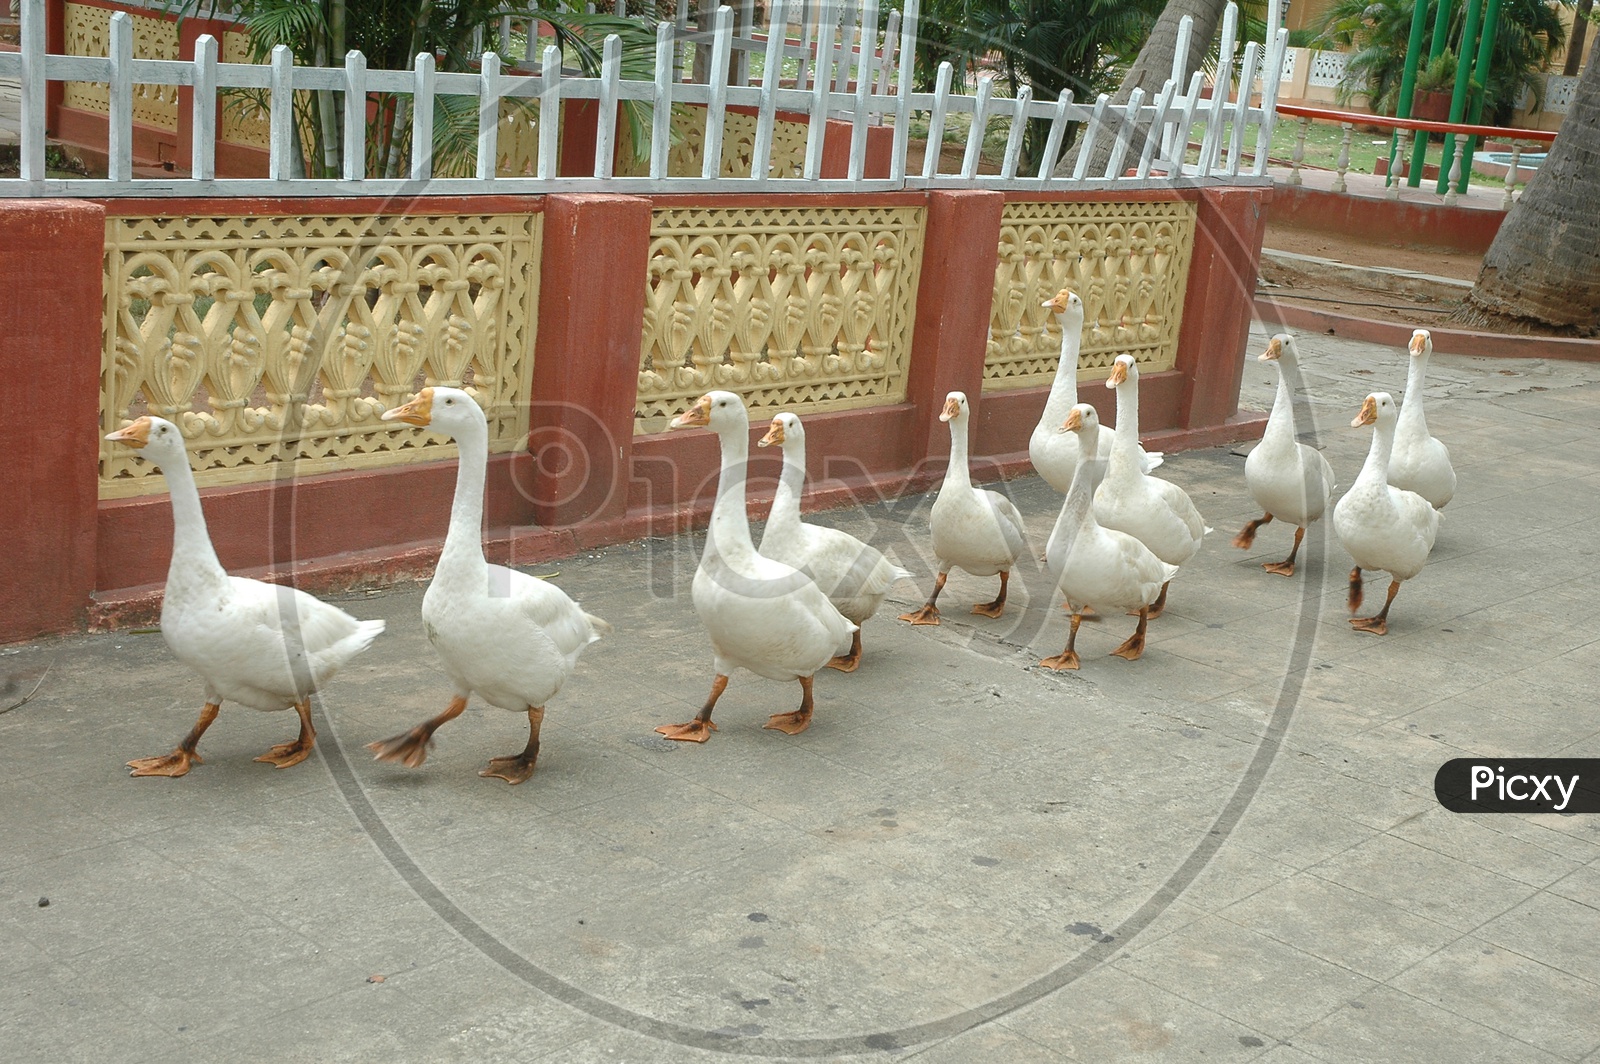 A Raft of Ducks walking along the pathway